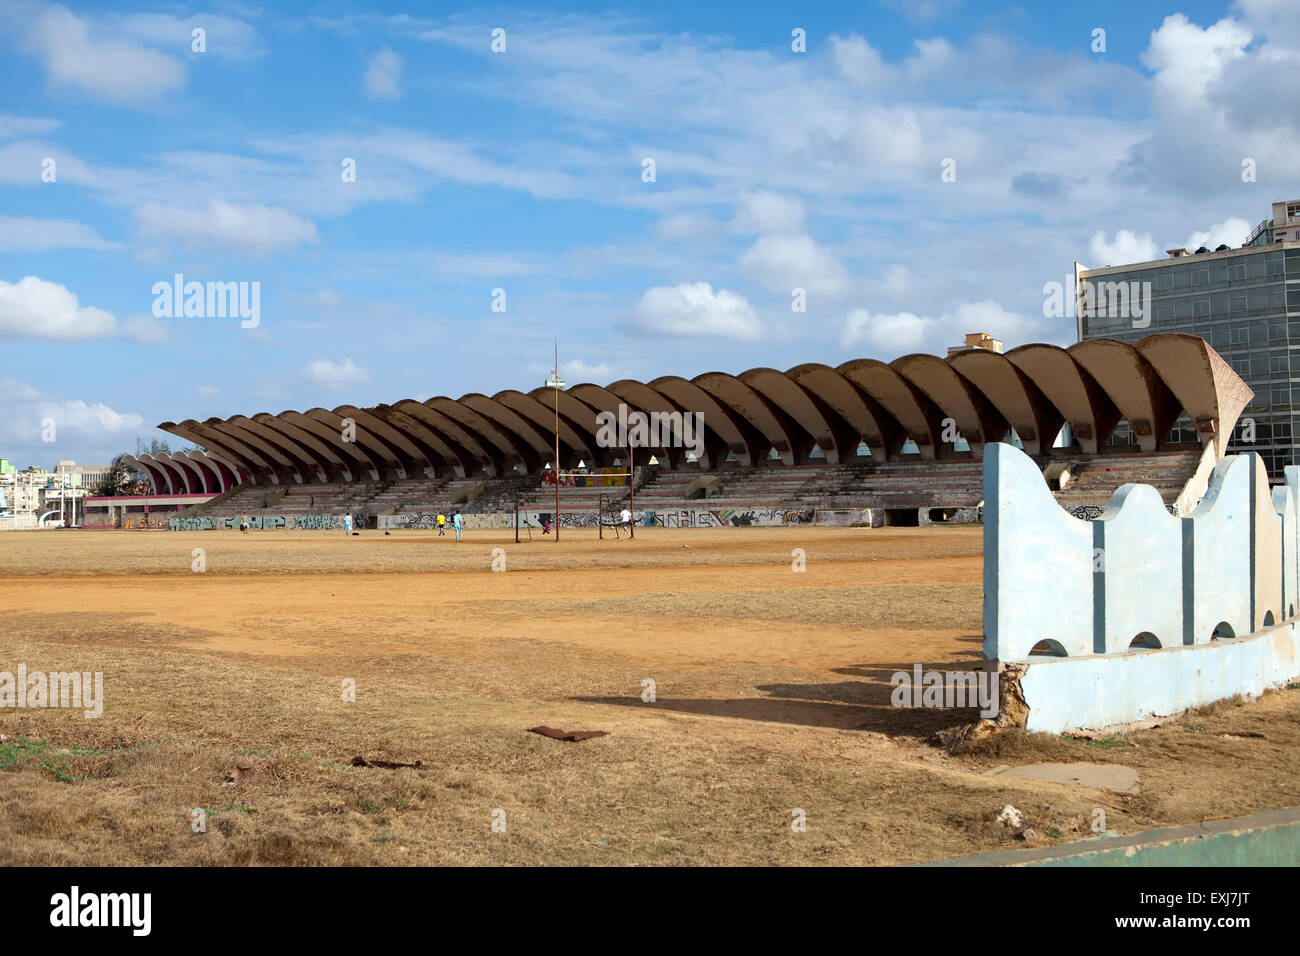 Cuba. Havana. City stadium. Stock Photo